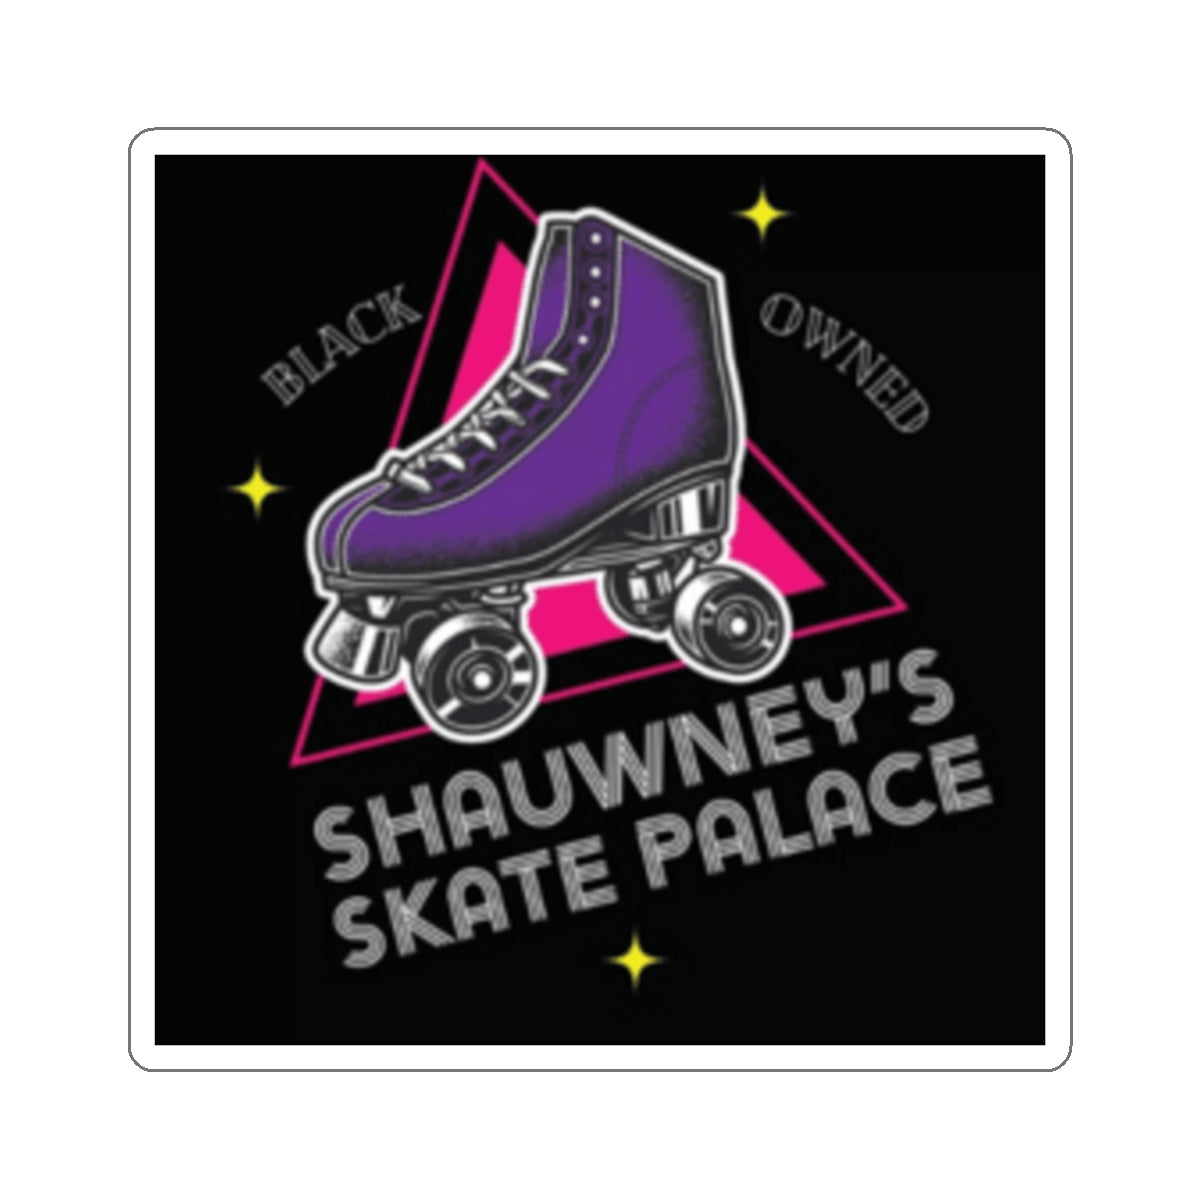 Shauwney's Skate Palace Stickers